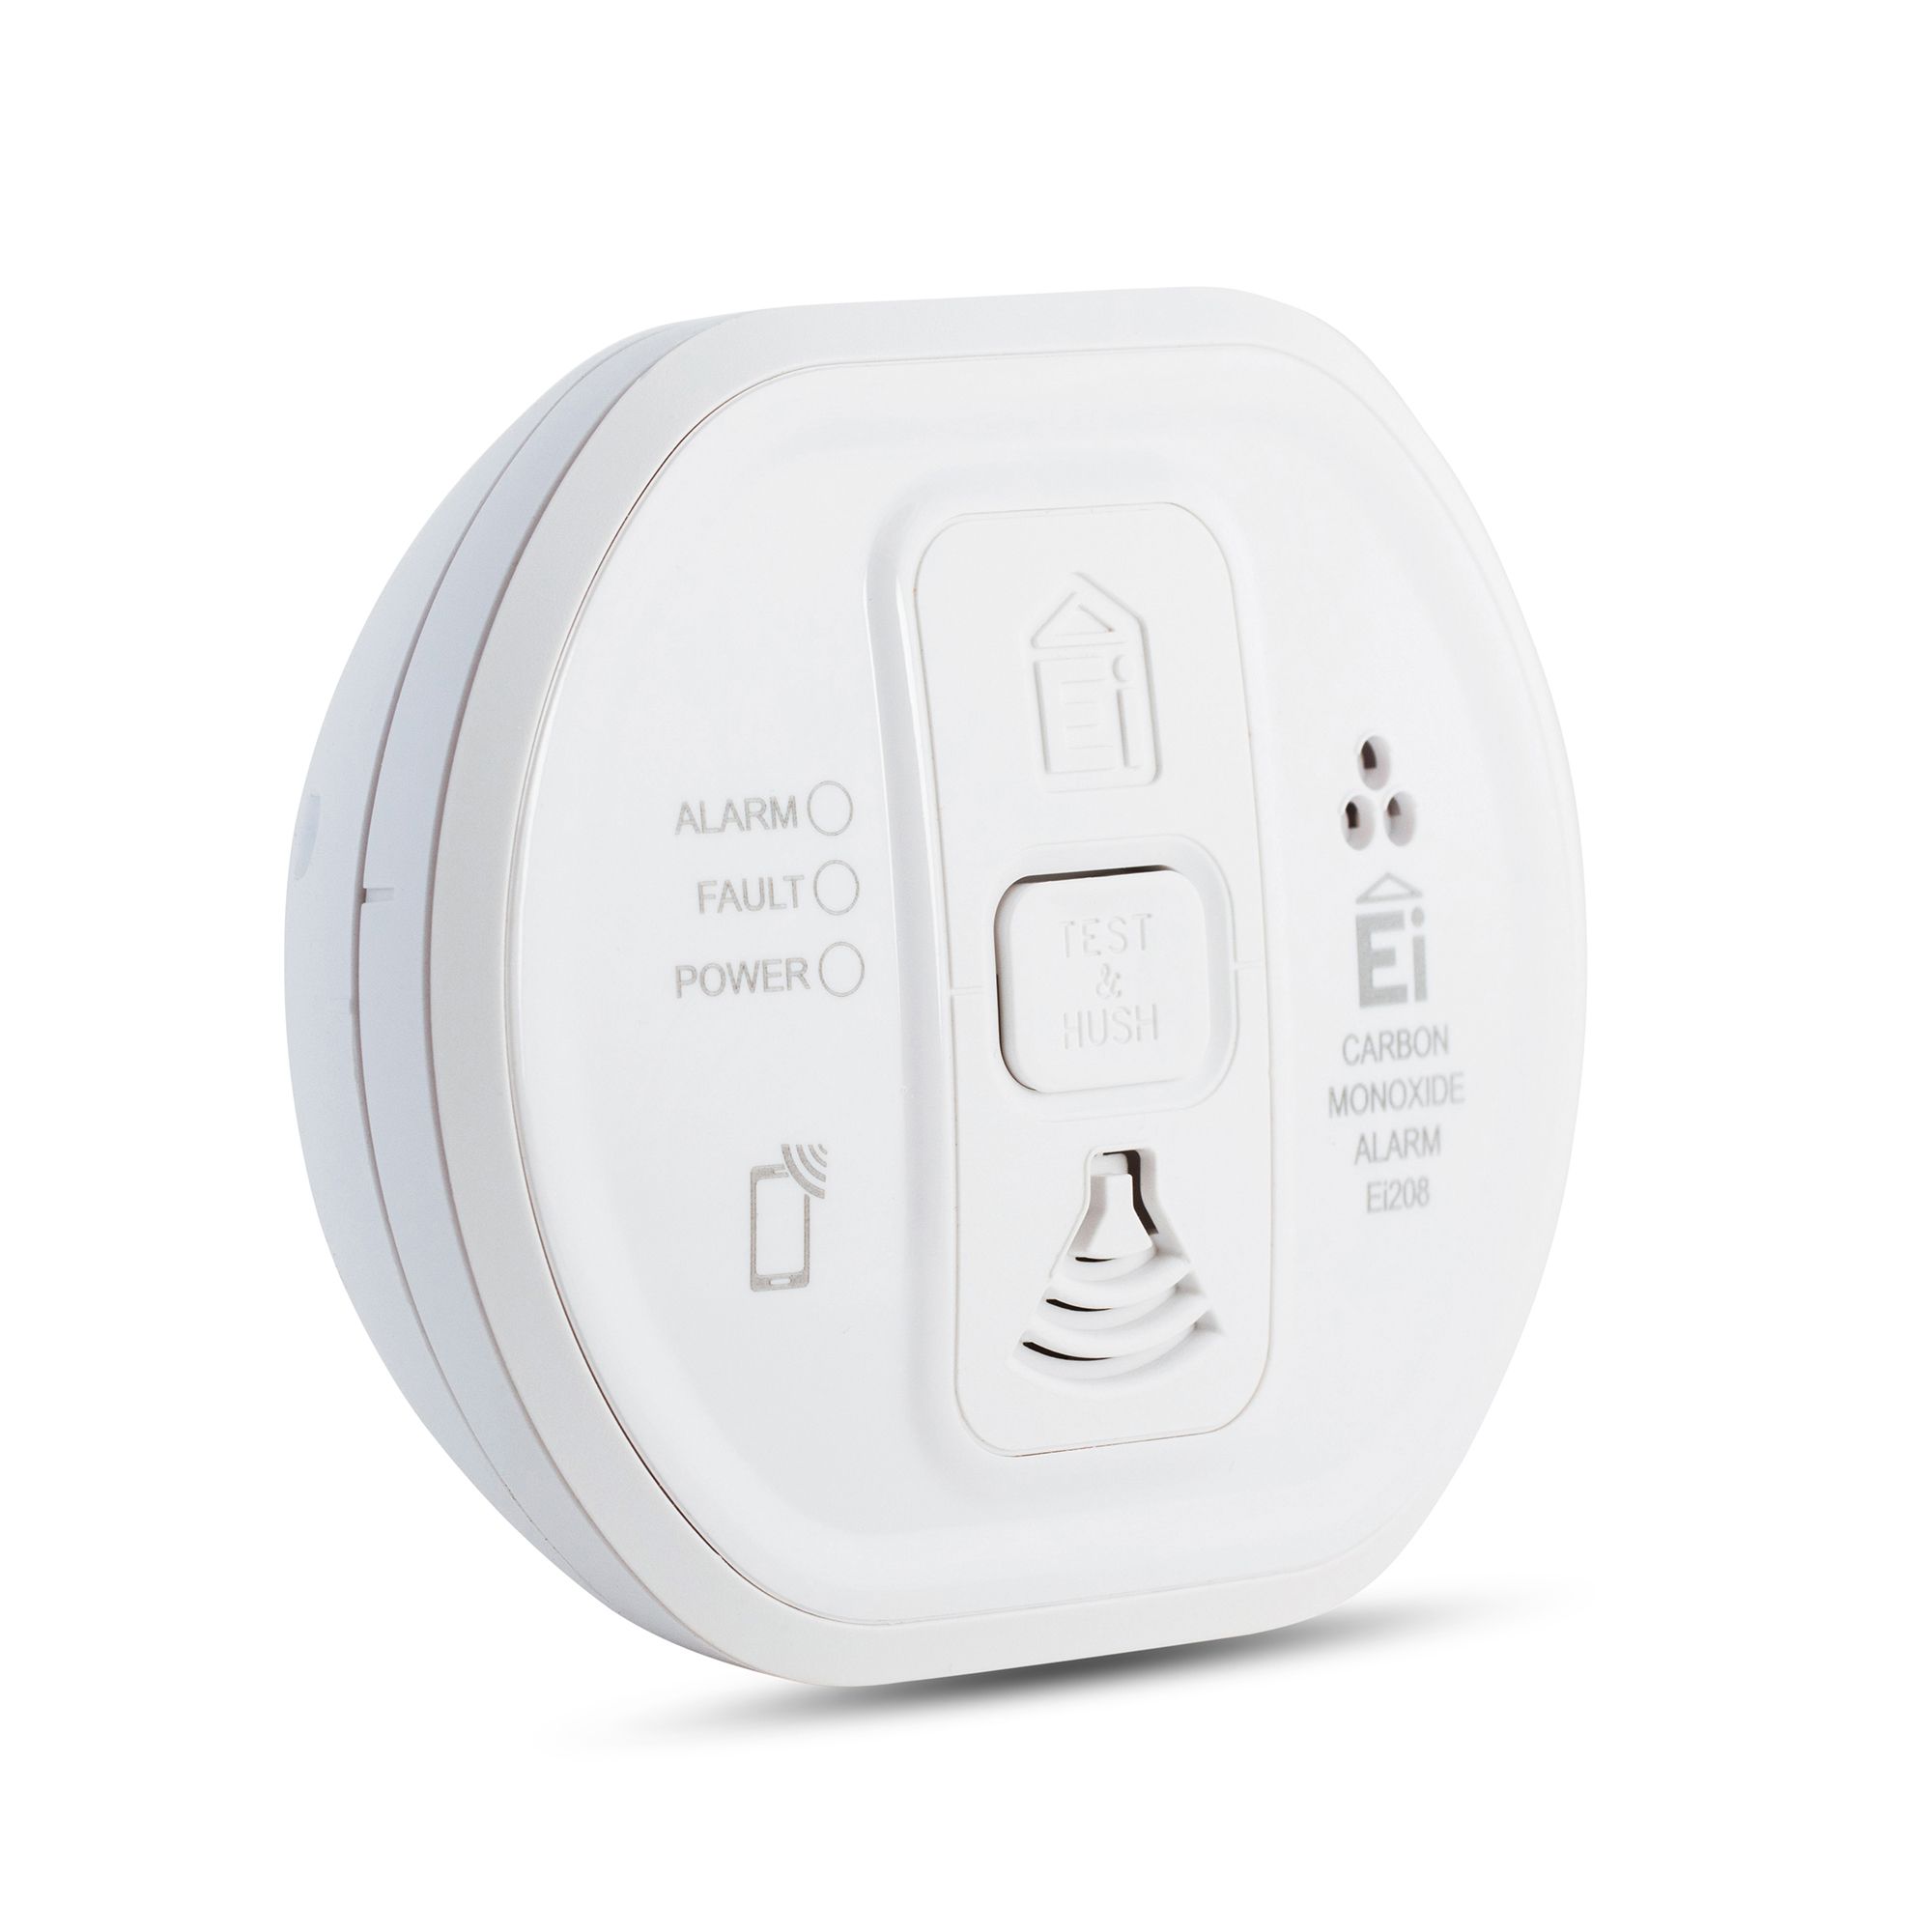 Ei3014 Heat Alarm • EI Electronics